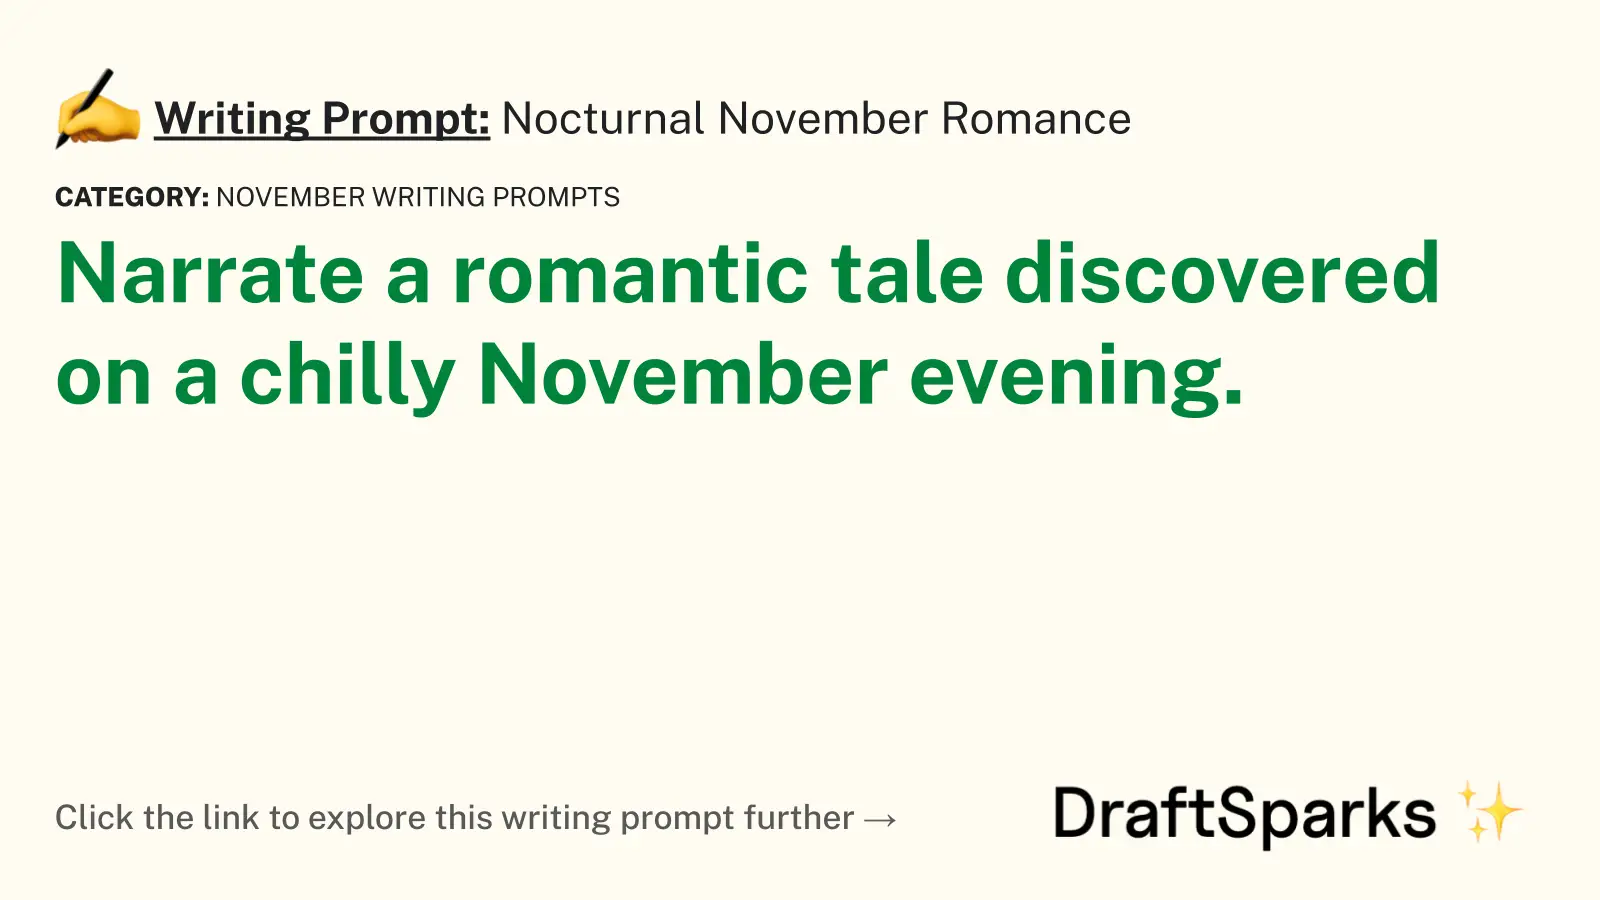 Nocturnal November Romance